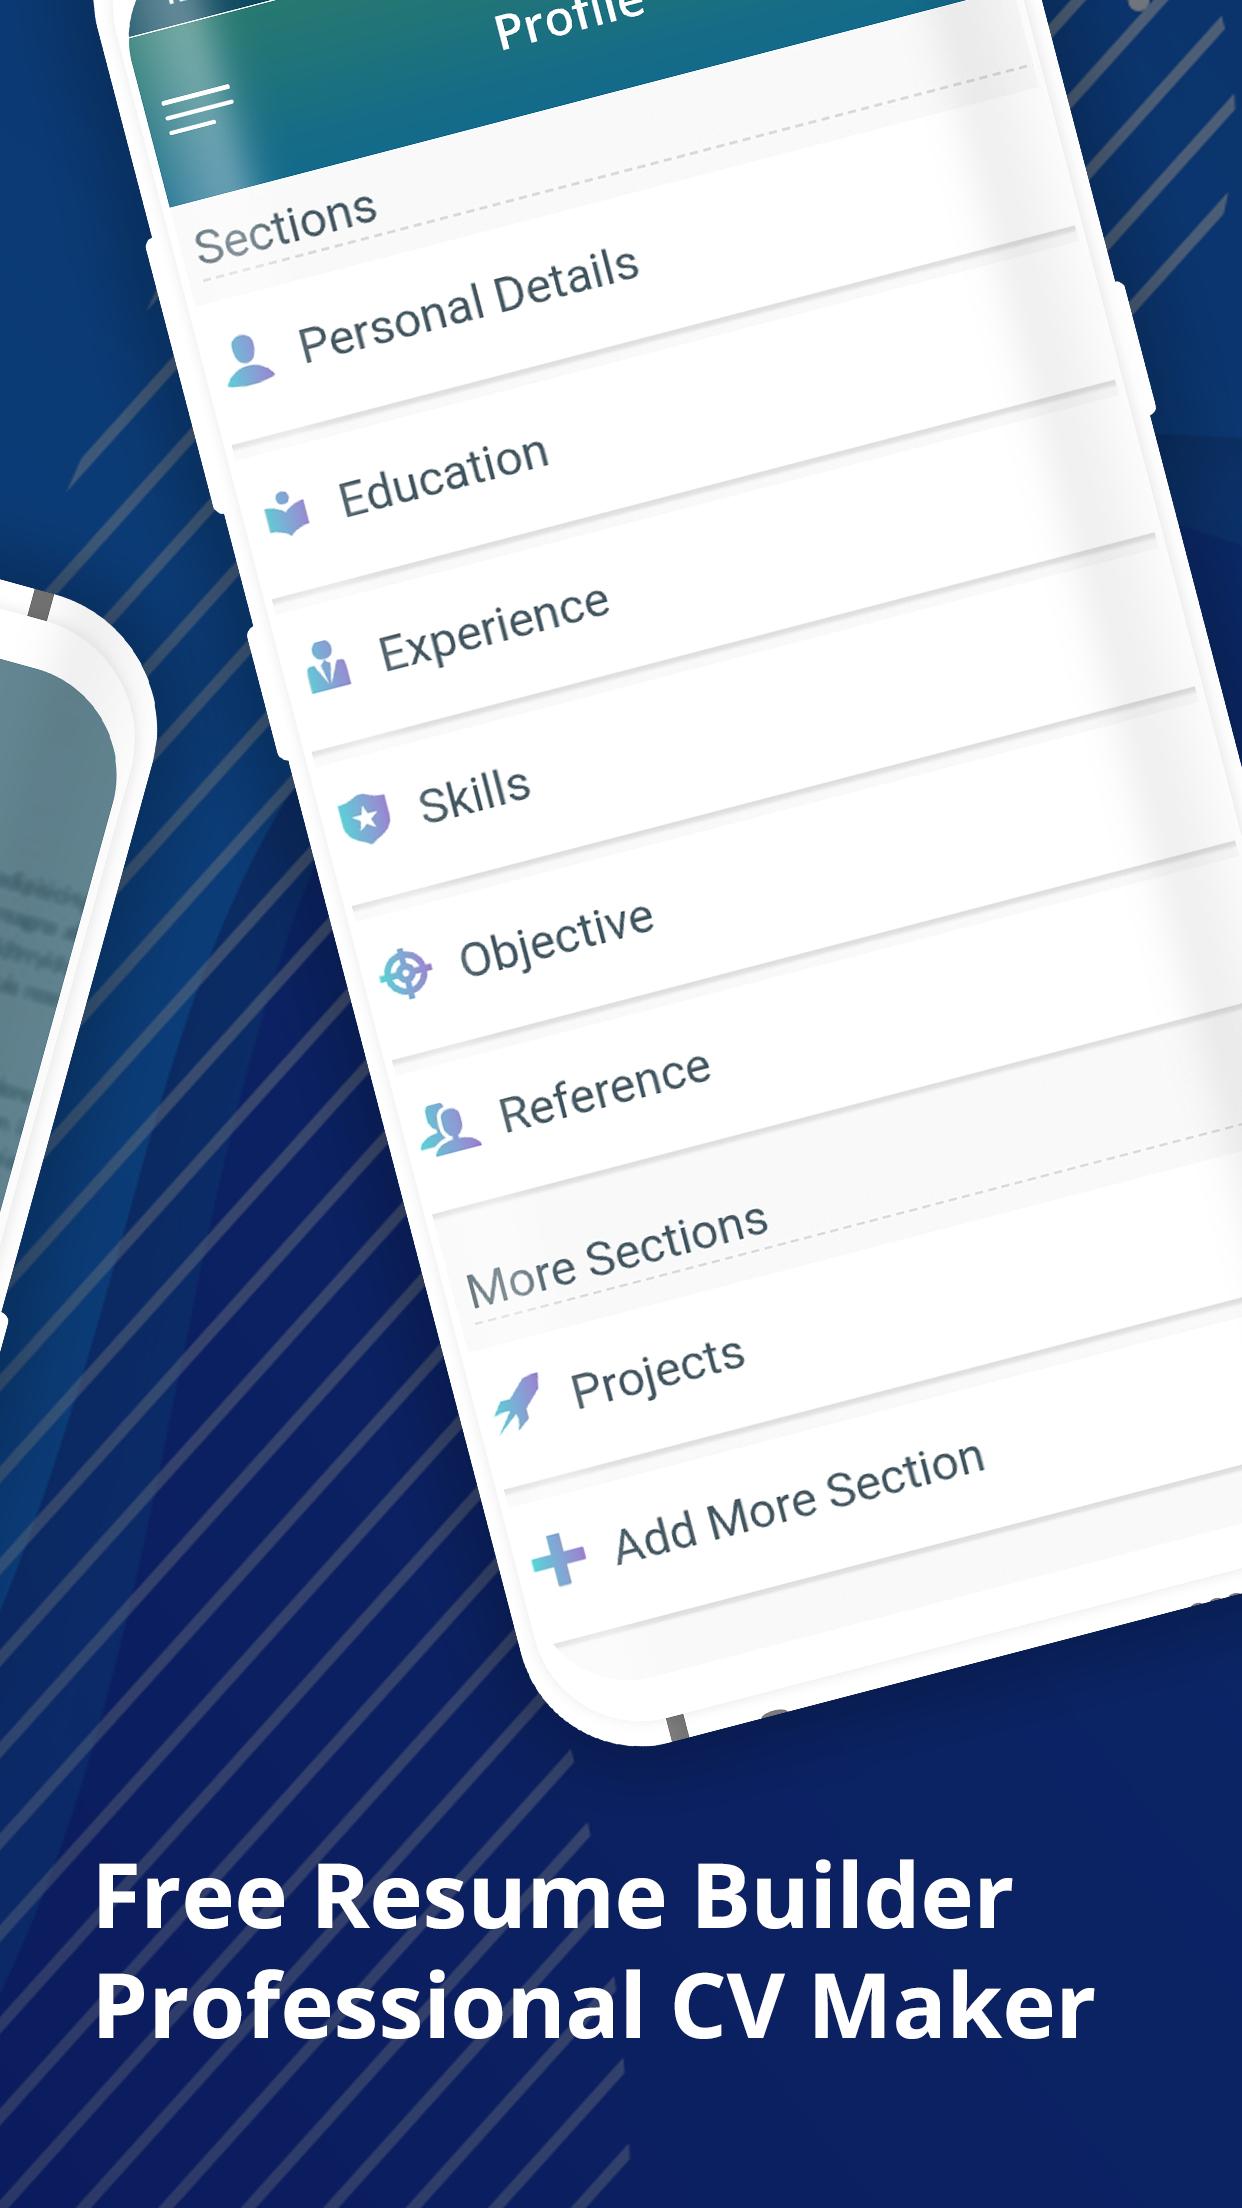 Resume Builder - CV Maker Templates 2020 for Android - APK ...